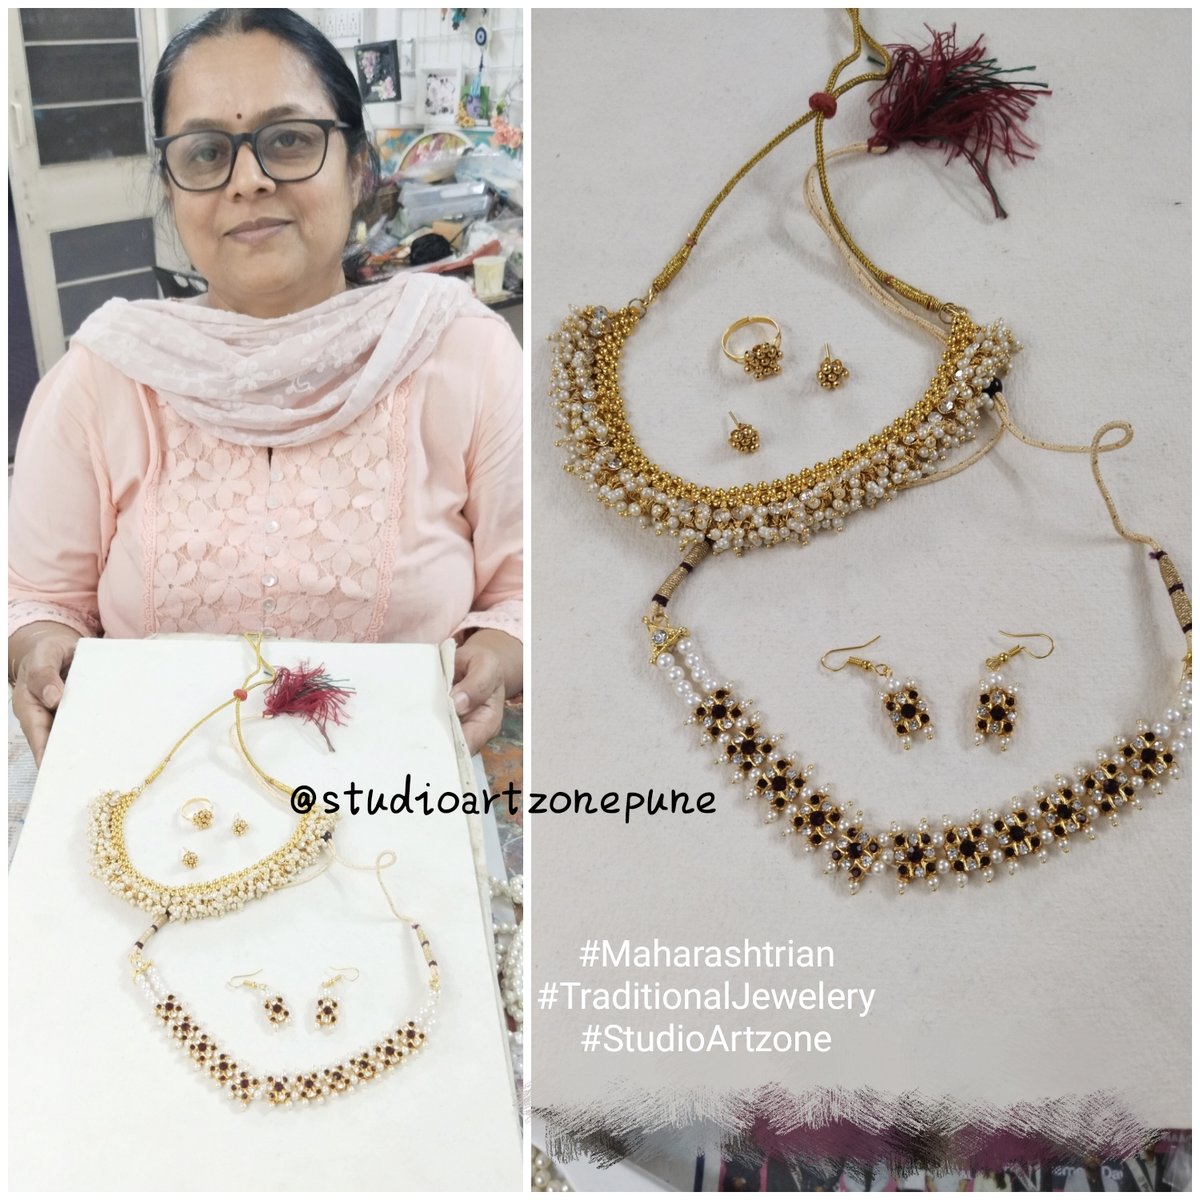 #maharashtrianjewellery #traditionaljewellery #jewellerymaking #StudioArtzone #studioartzonepune #workshopsinpune #PuneClasses #studentwork

Glimpses of the Maharashtrian Jewellery Workshop @ Studio Artzone